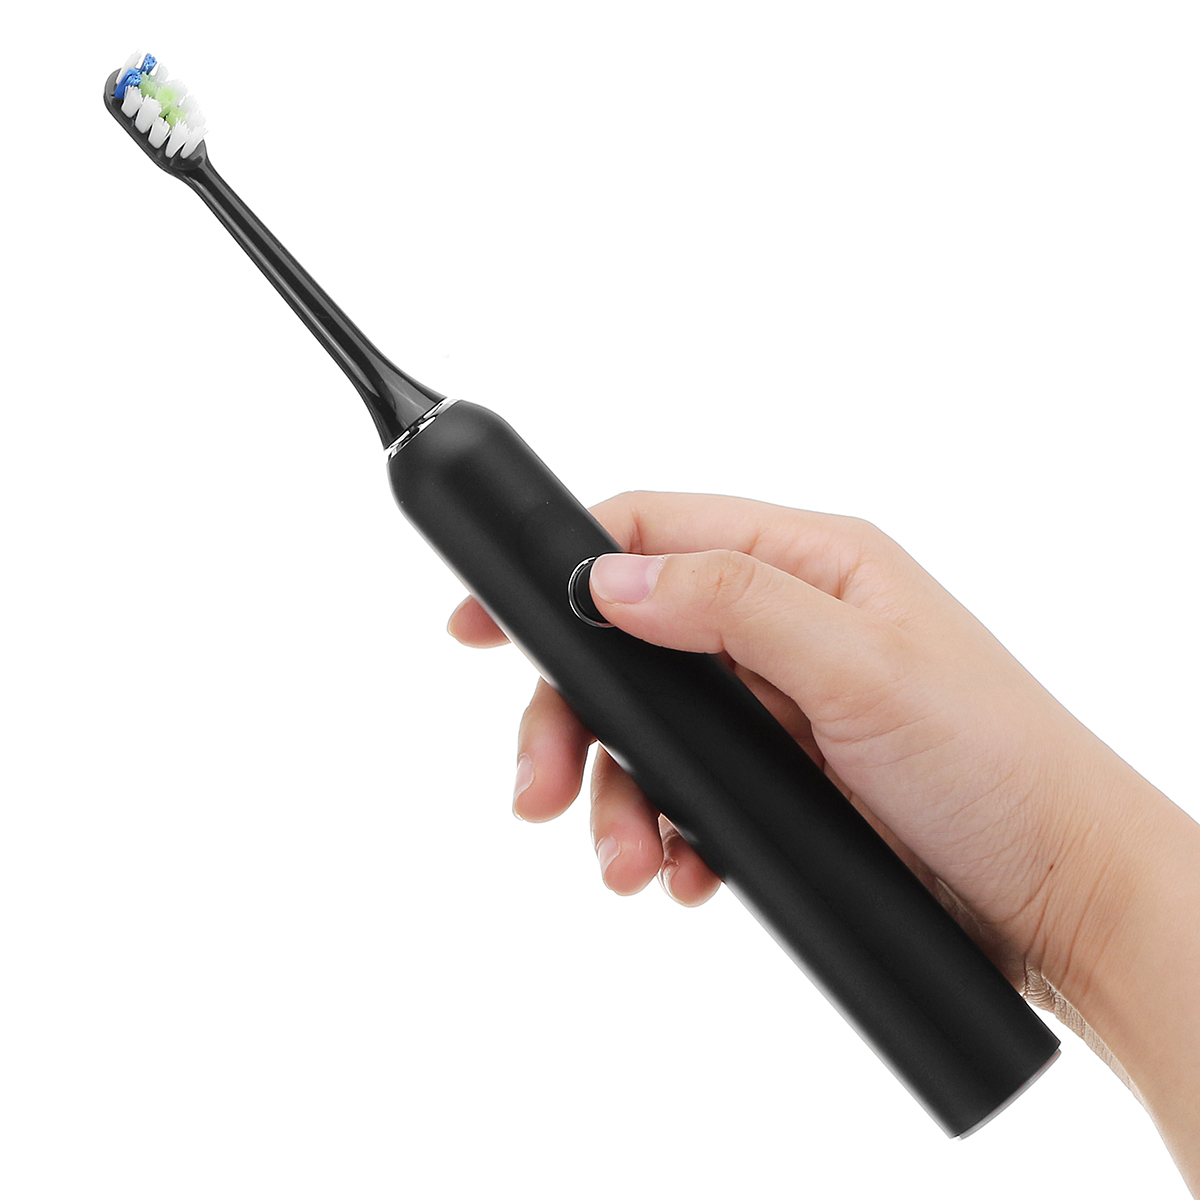 Waterproof-Rechargeable-Sonic-Electrric-Toothbrush-Upgraded-Ultrasonic-Electric-Toothbrush-1361114-11